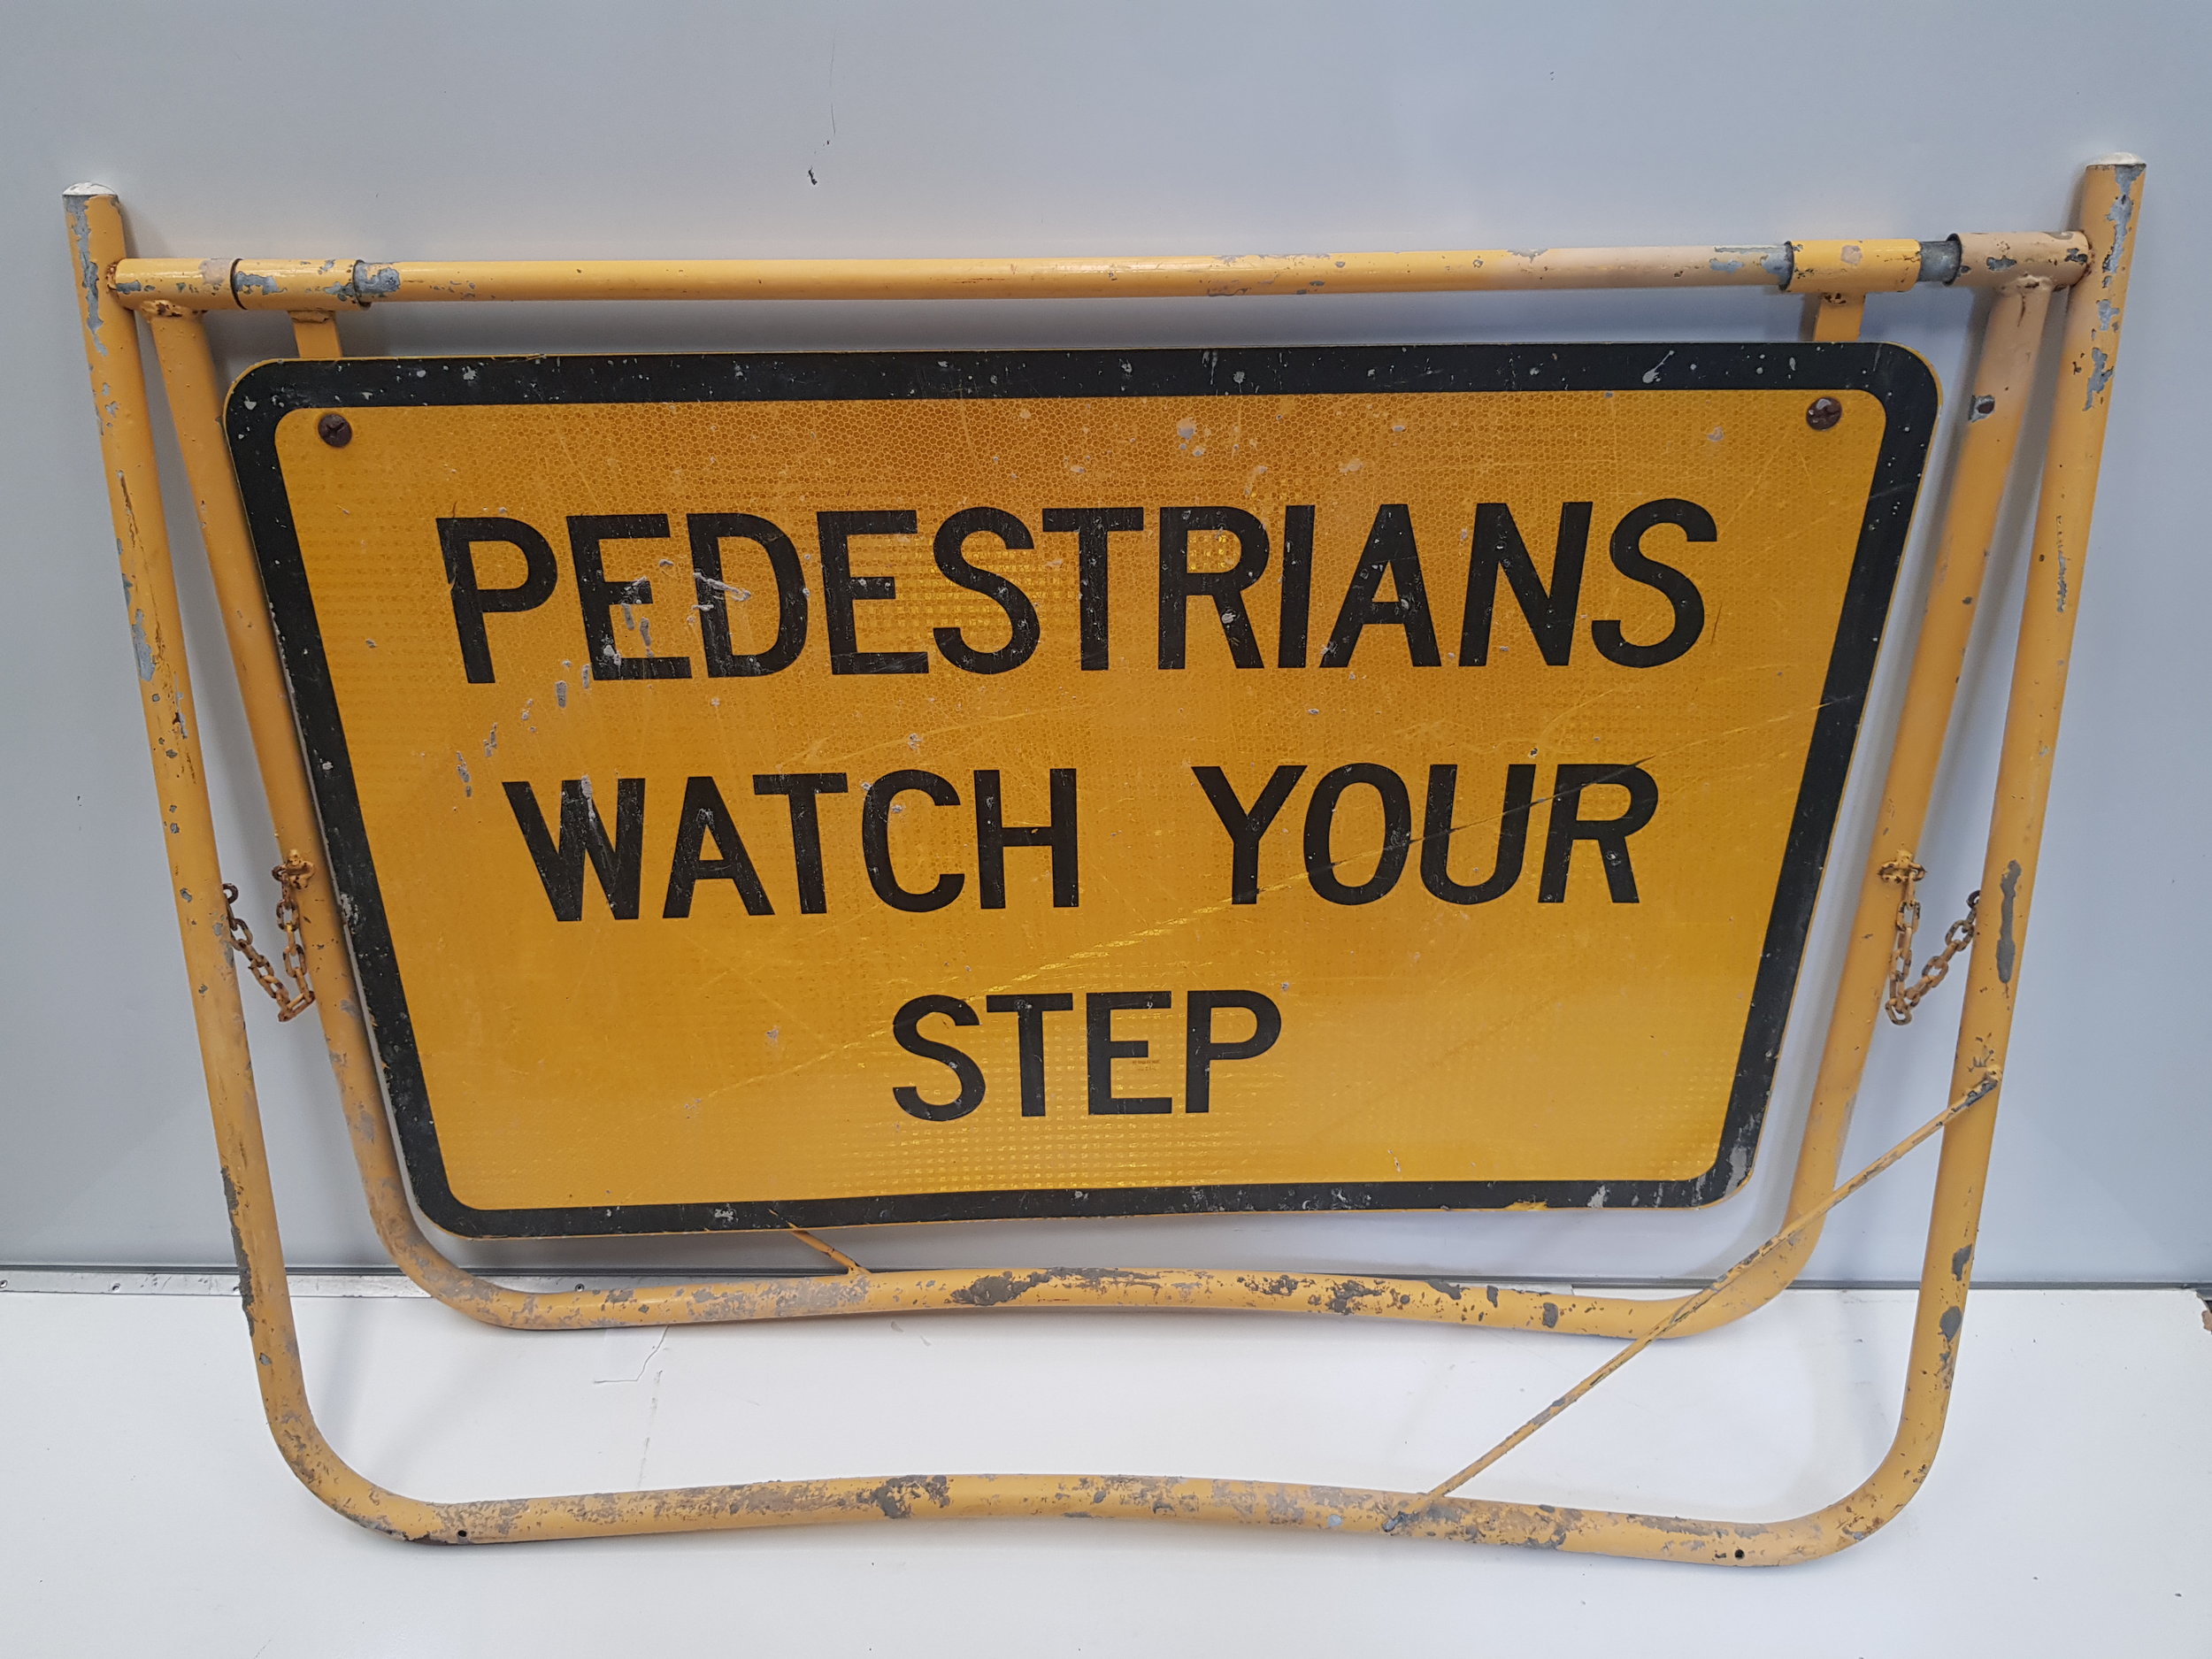 Pedestrians Watch Your Step Swing Stand Sign.jpg